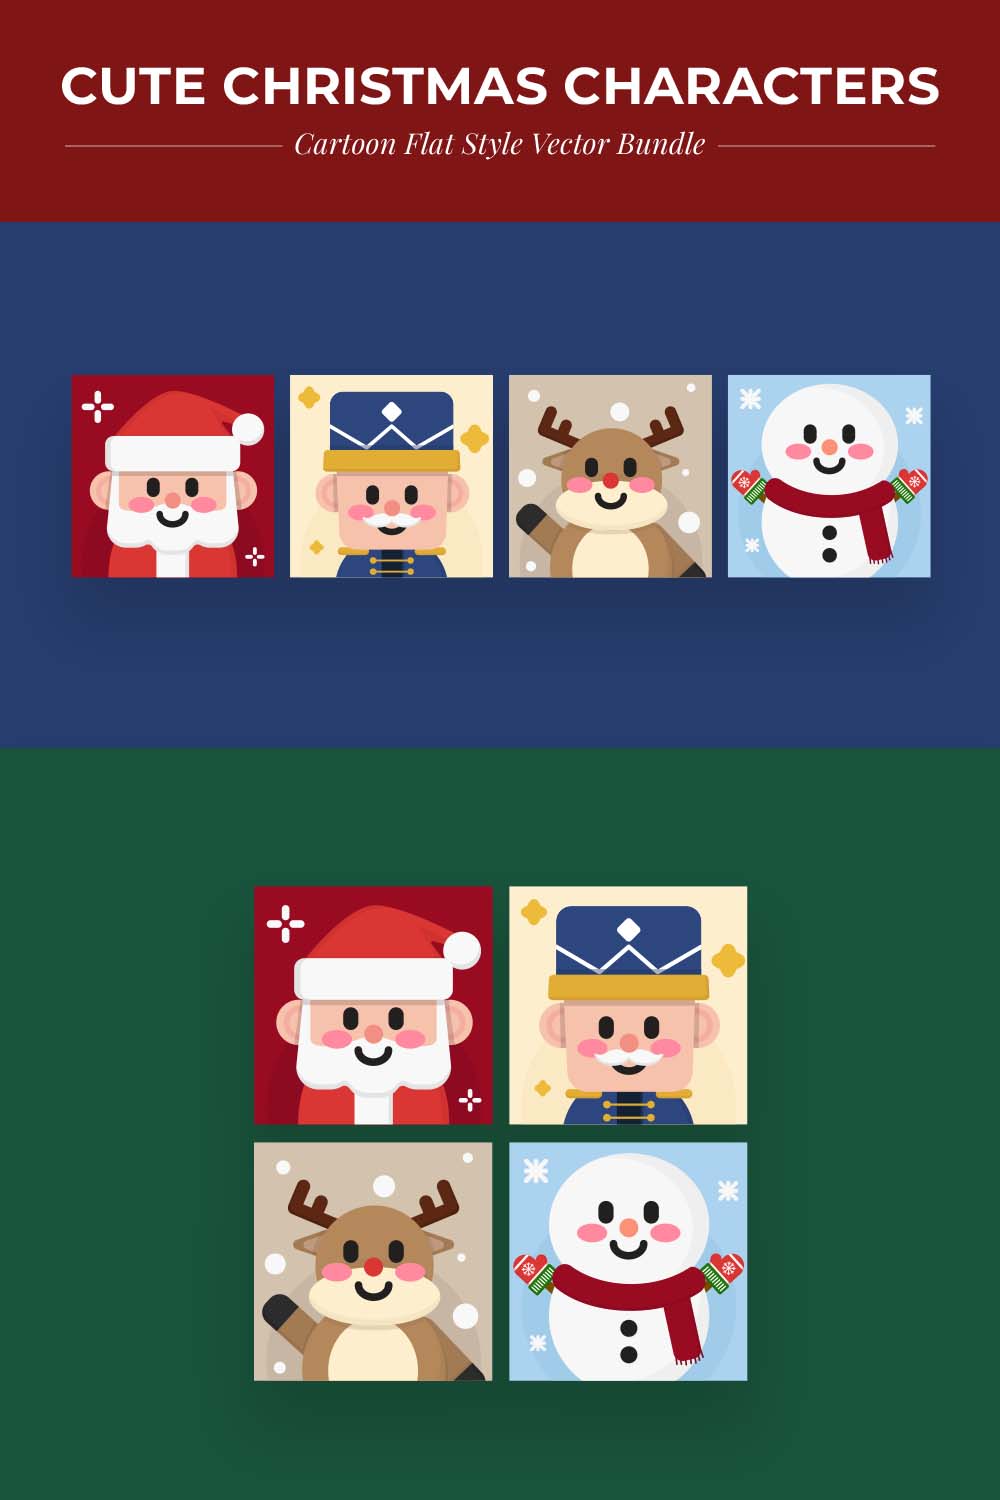 Cute Christmas Characters Cartoon Flat Style Design pinterest image.